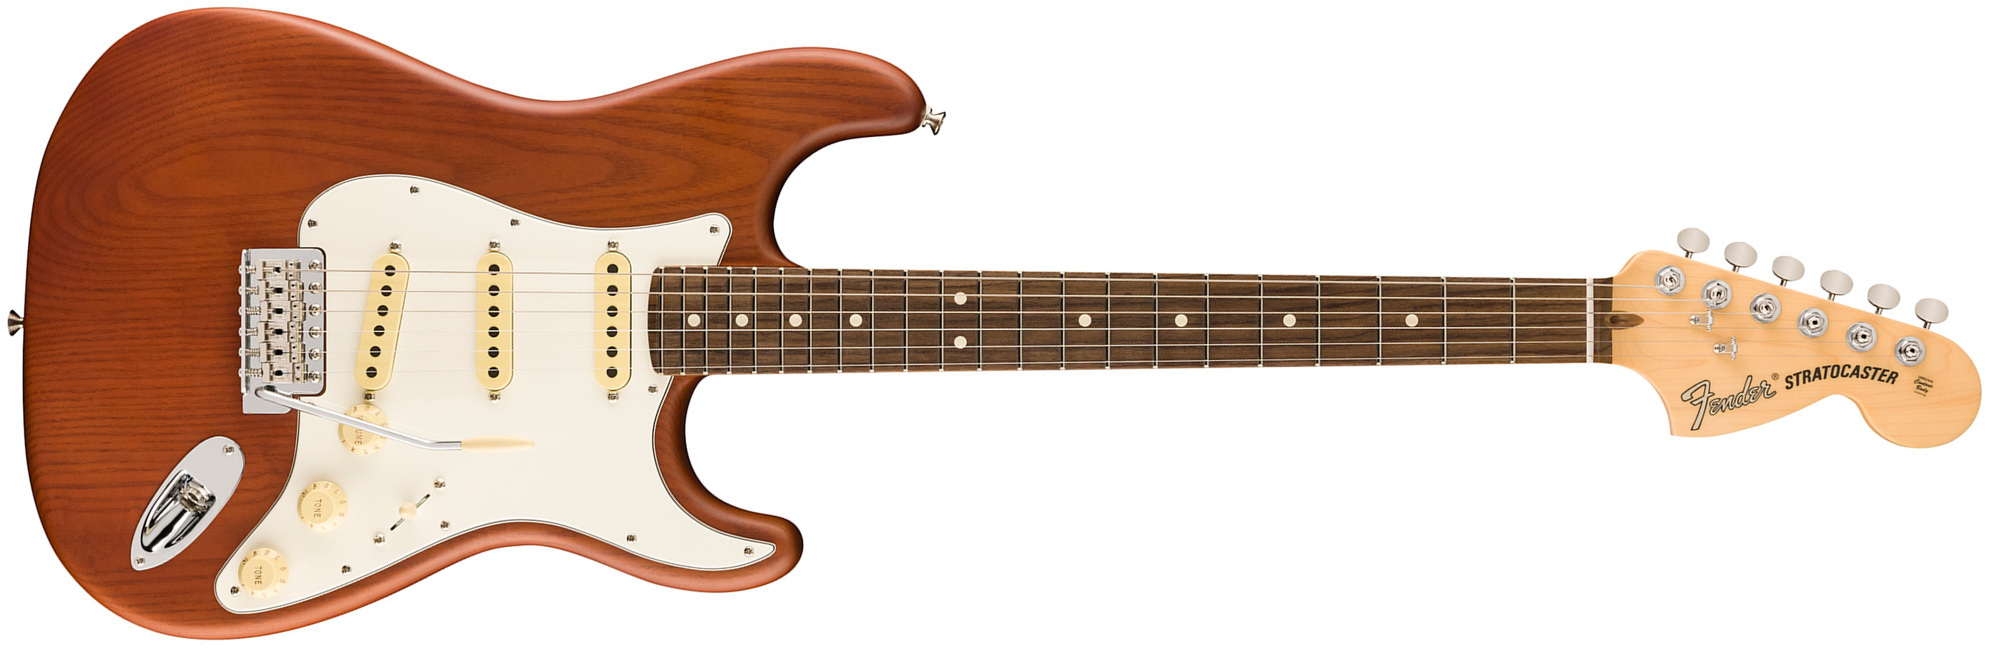 Fender Strat American Timber Performer Fsr Ltd Usa 3s Rw - Mocha - Elektrische gitaar in Str-vorm - Main picture